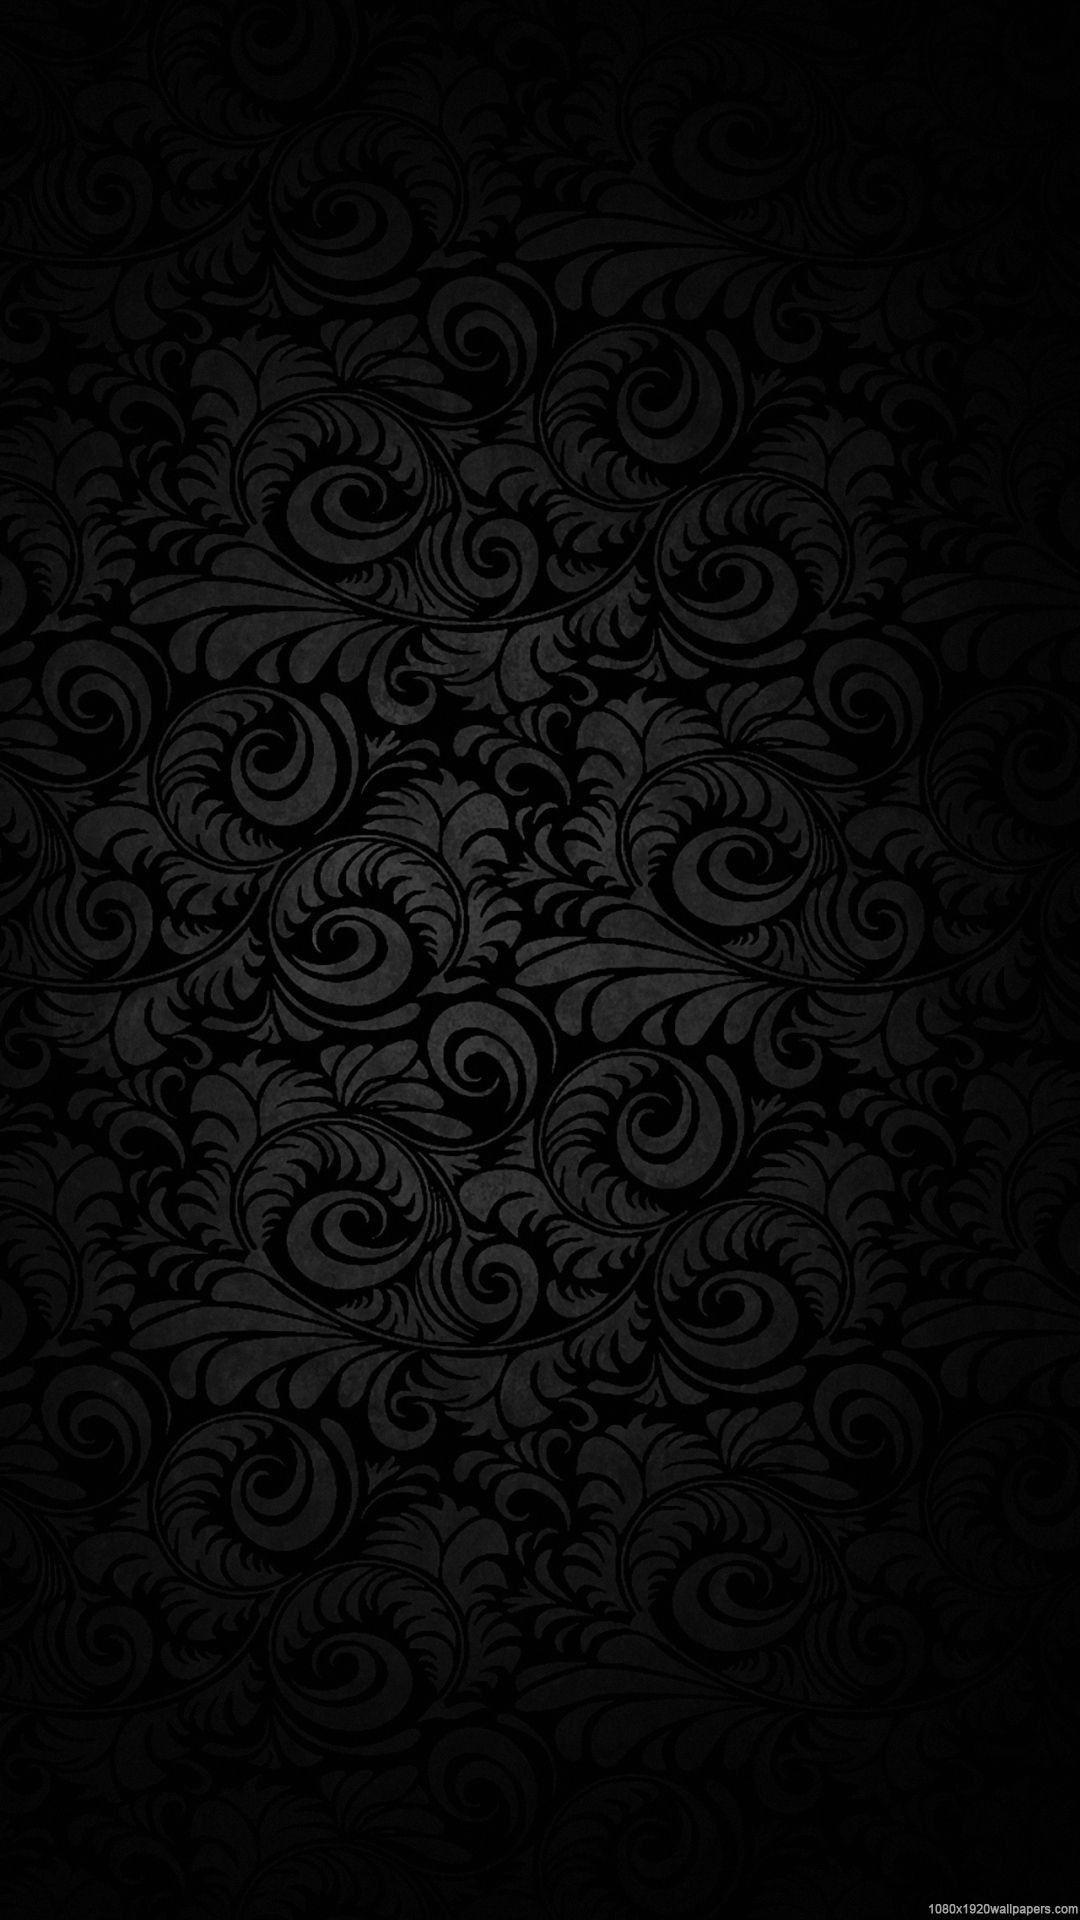 Black Mobile Wallpaper Free Black Mobile Background